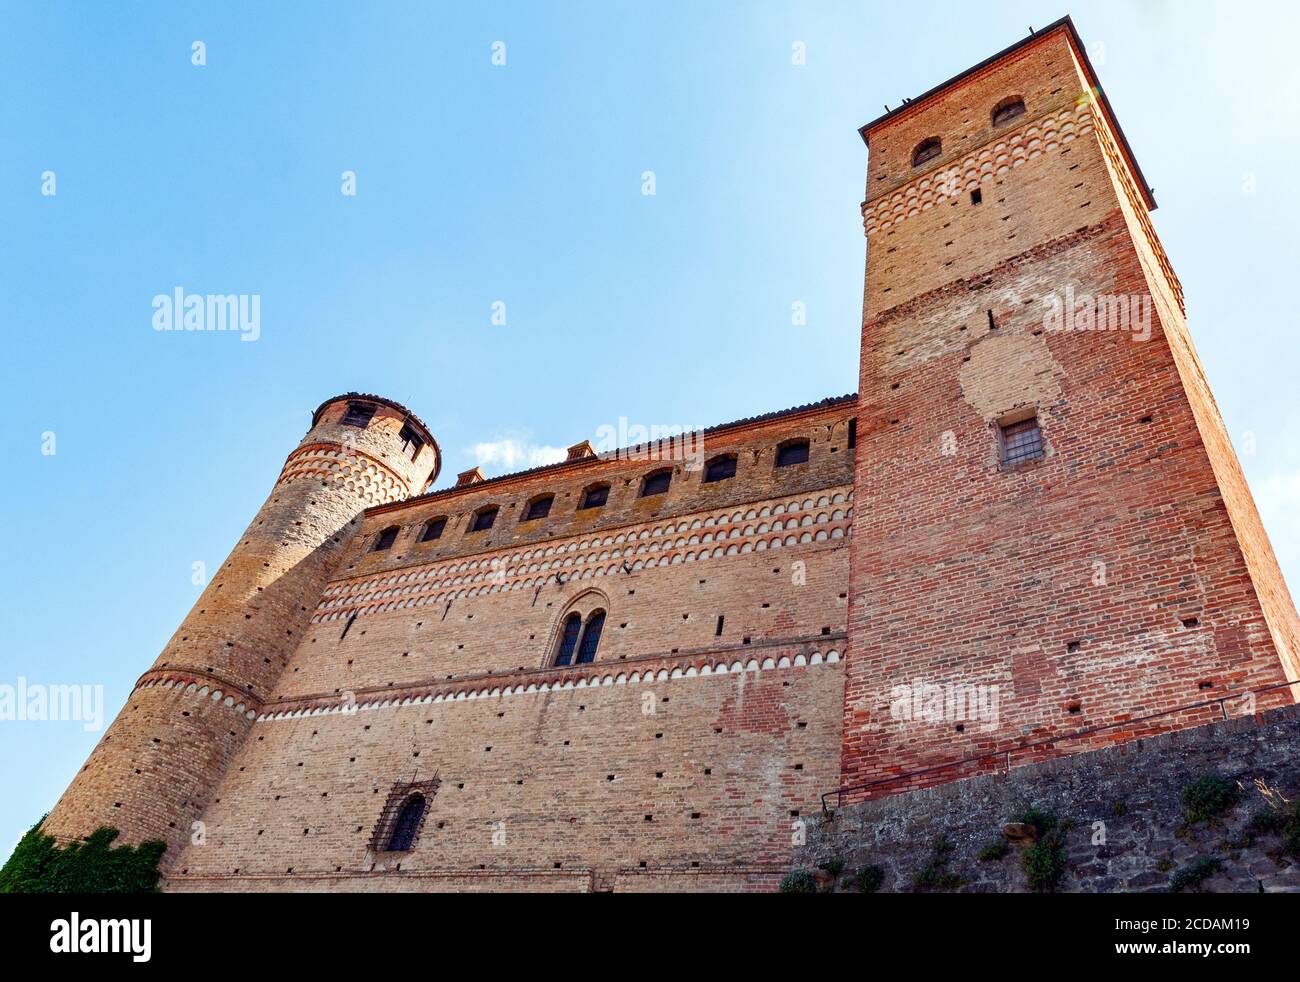 Castello di serralunga dalba hi-res stock photography and images - Alamy